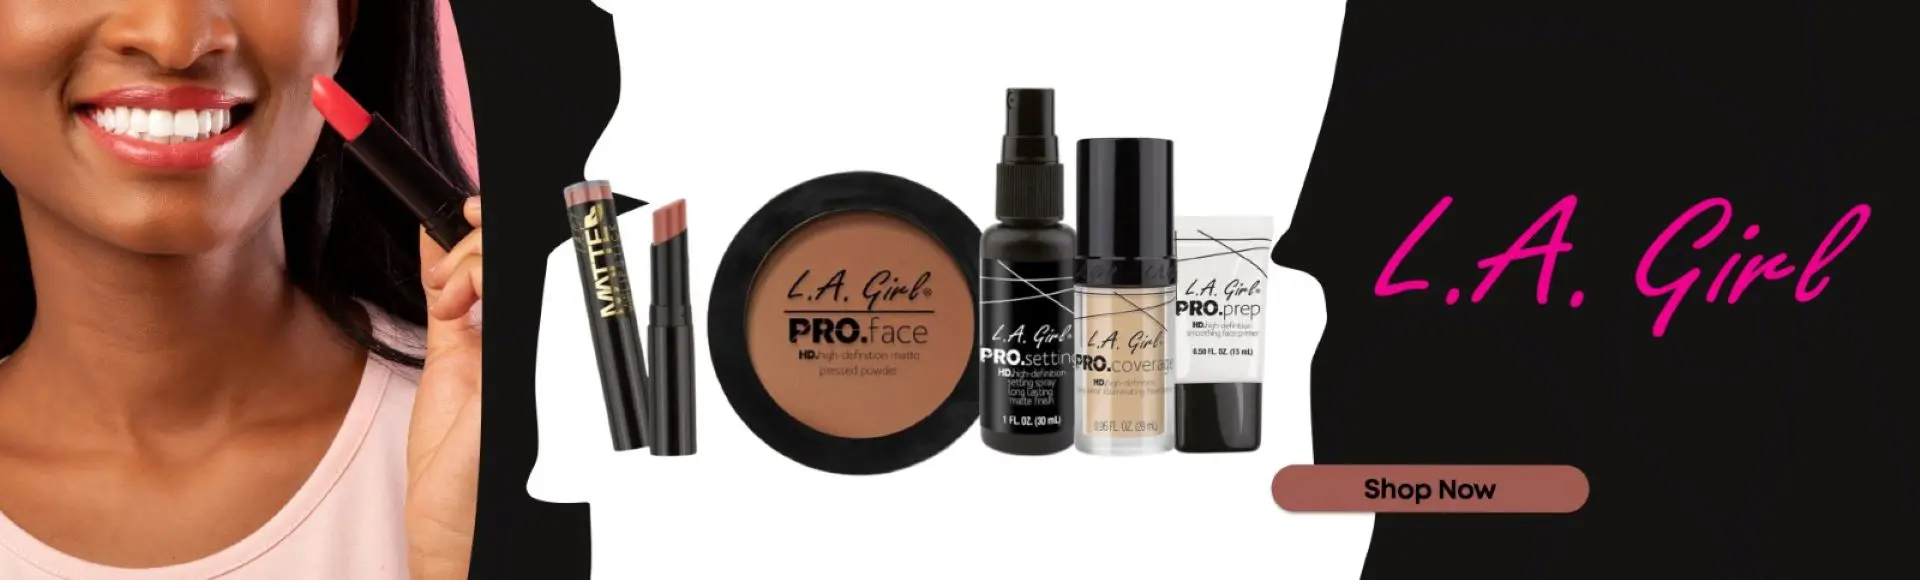 L.A Girl High Definition Pro Prep Face Primer